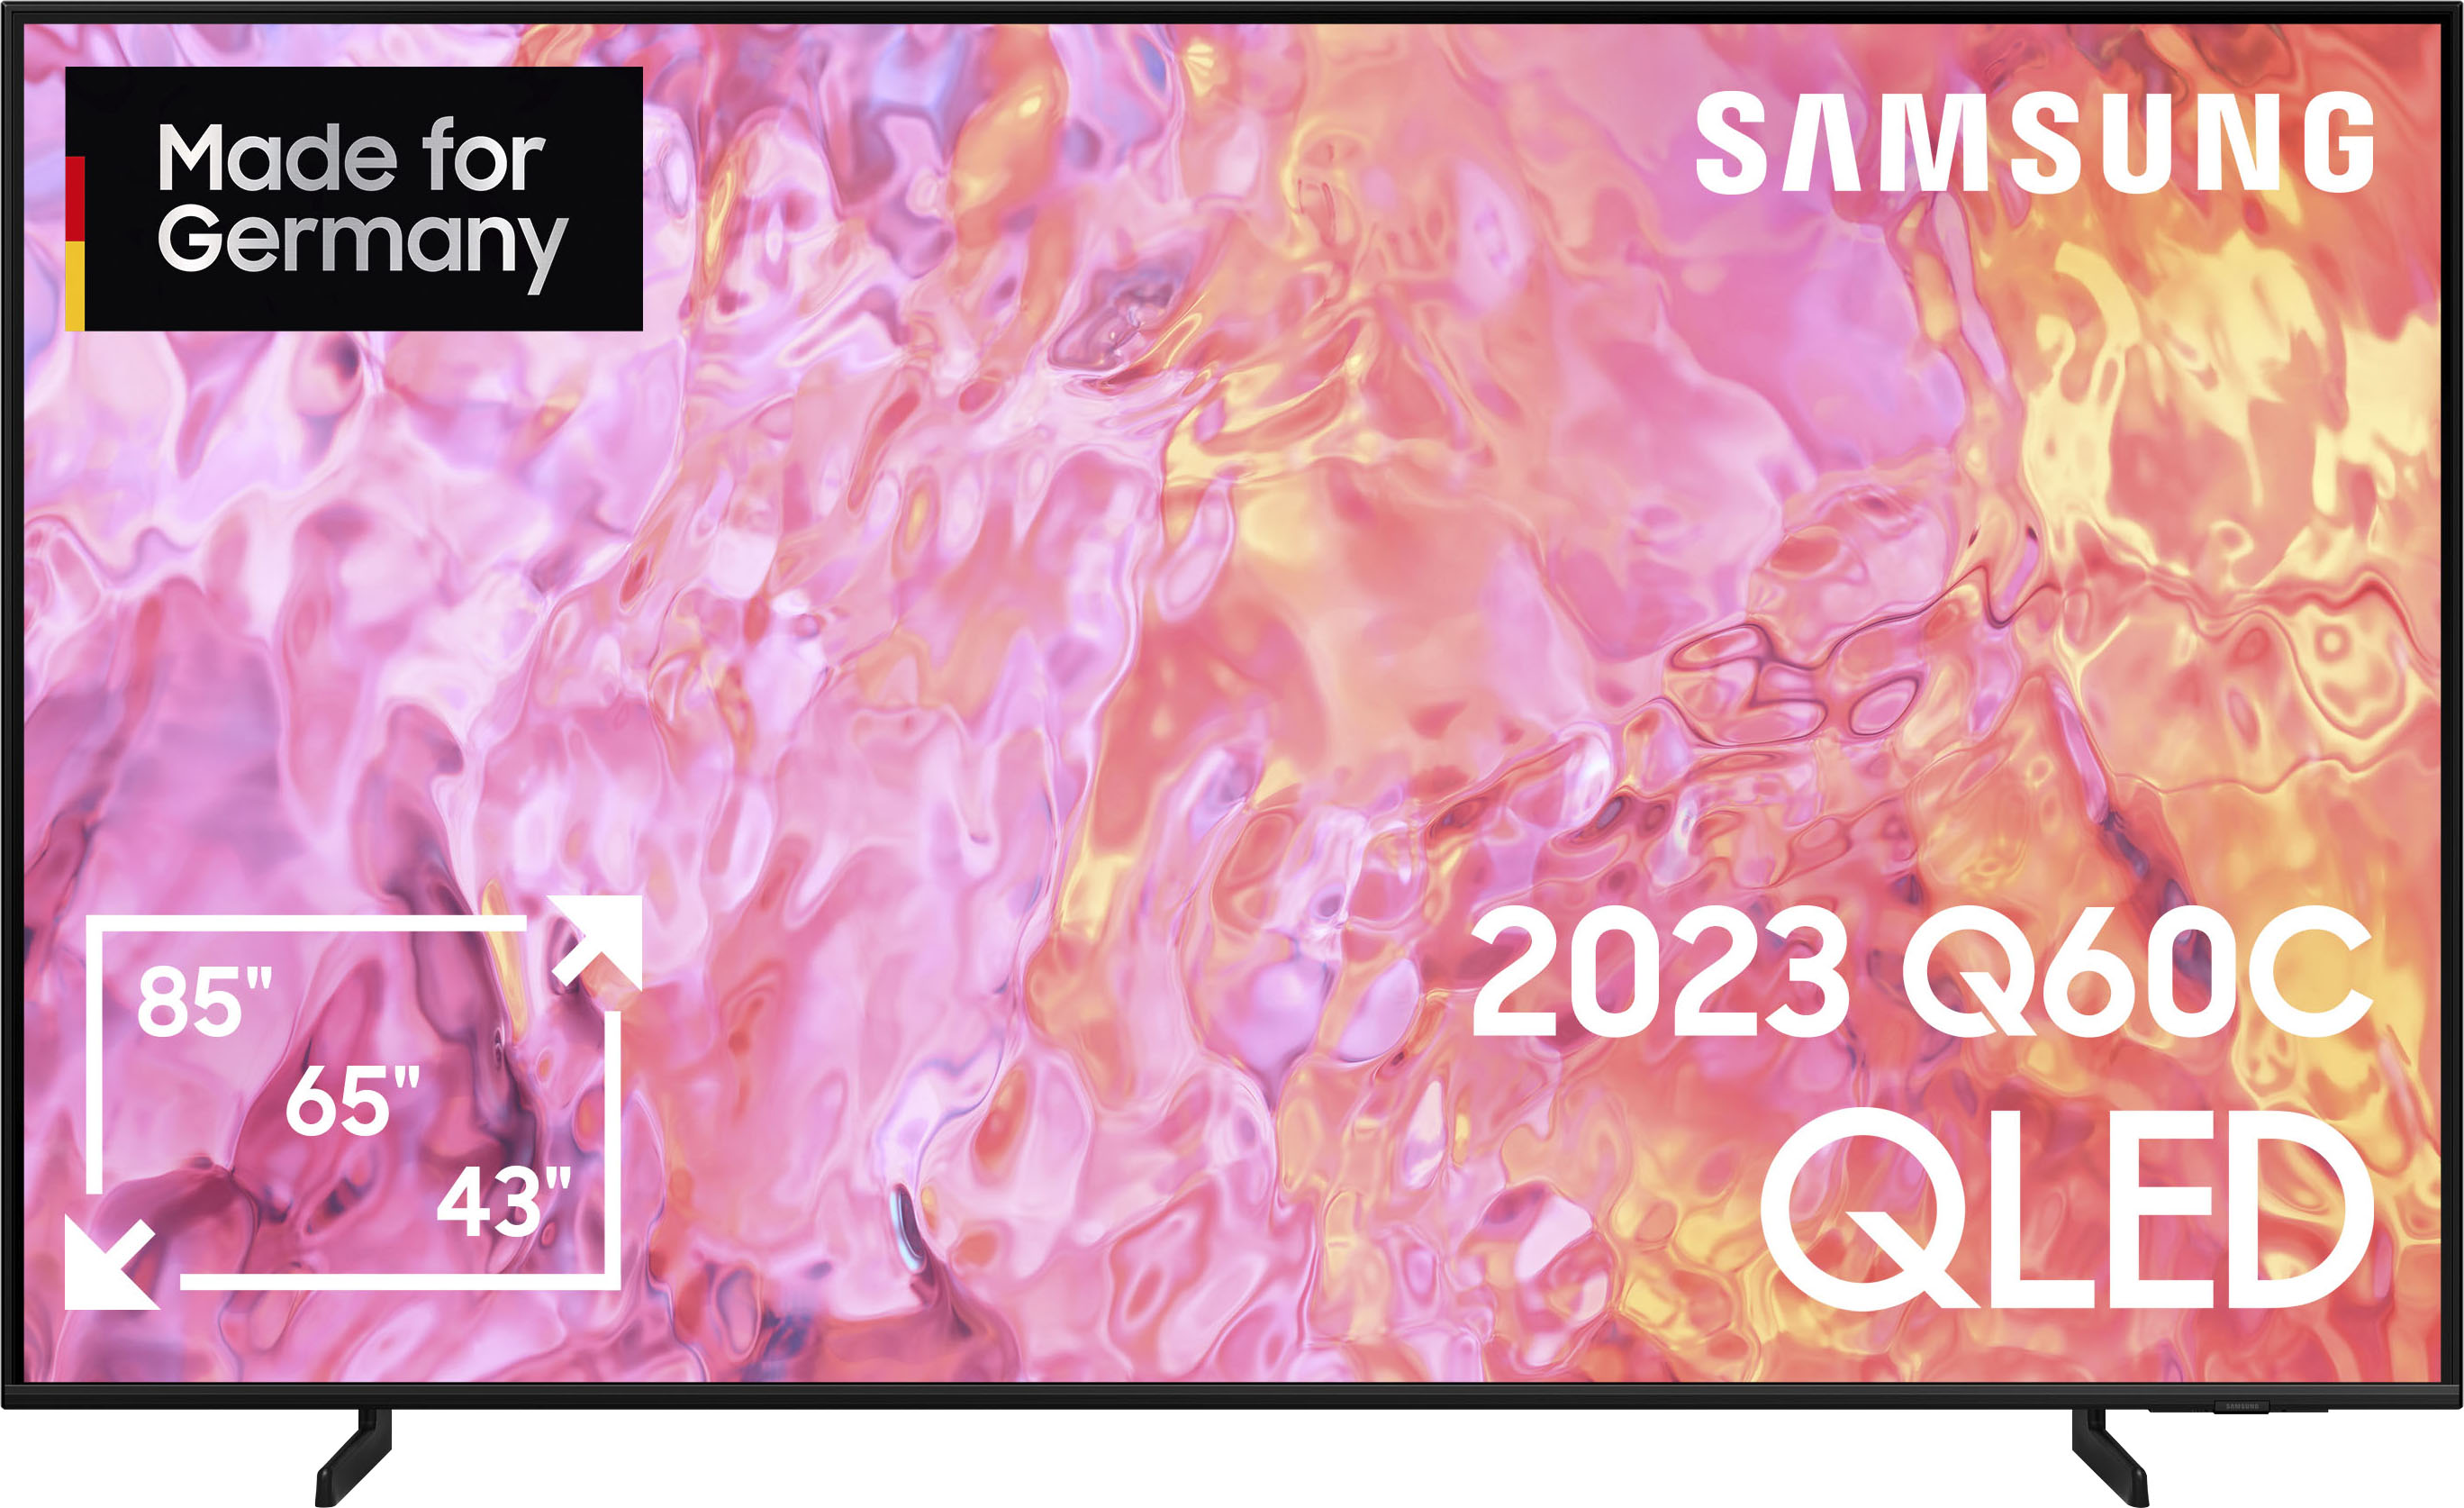 Samsung GQ43Q60C 108cm 43